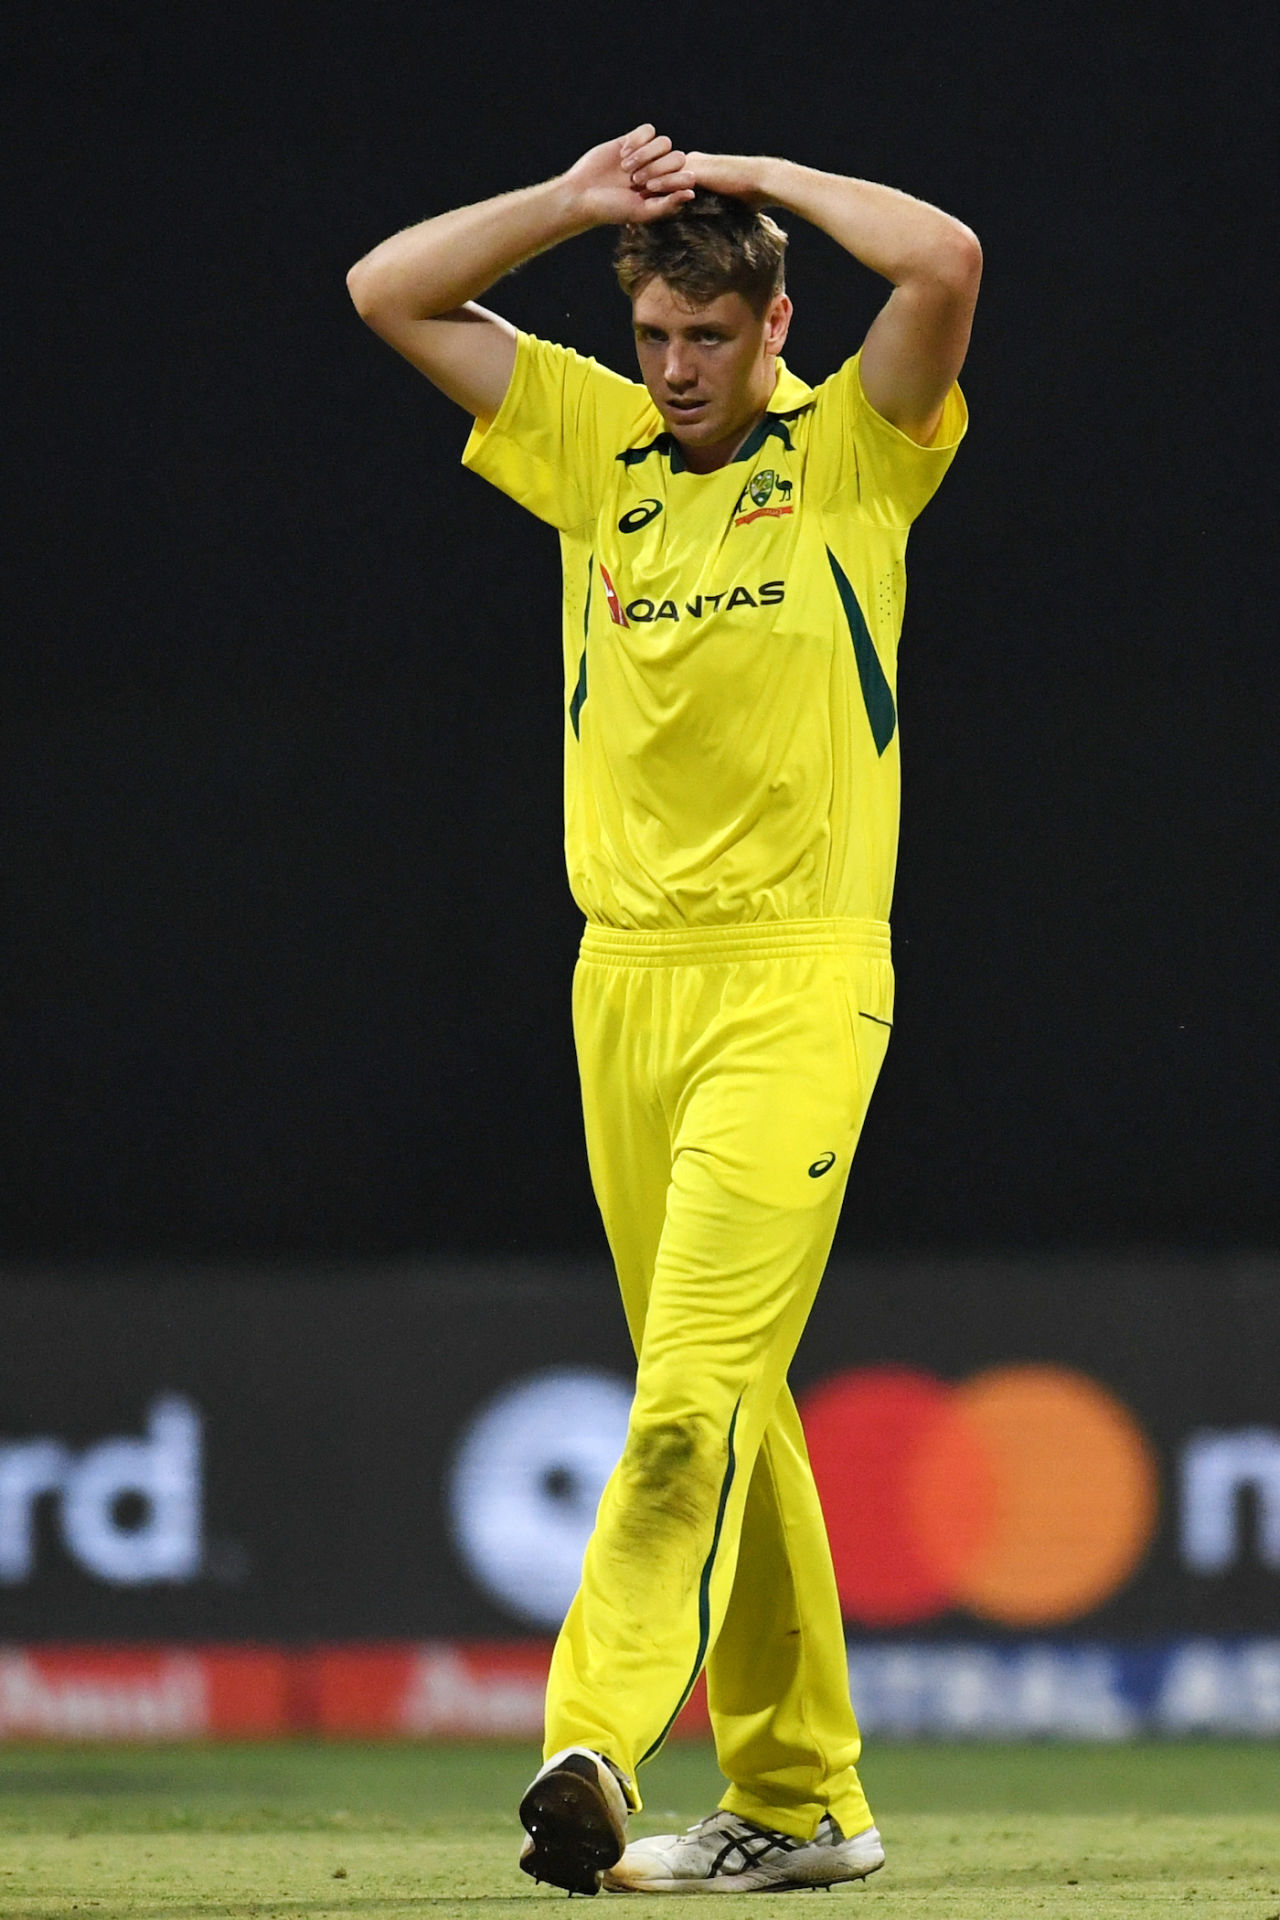 Cameron Green reacts as a chance goes past slip, India vs Australia, 1st ODI, Mumbai, March 17, 2023